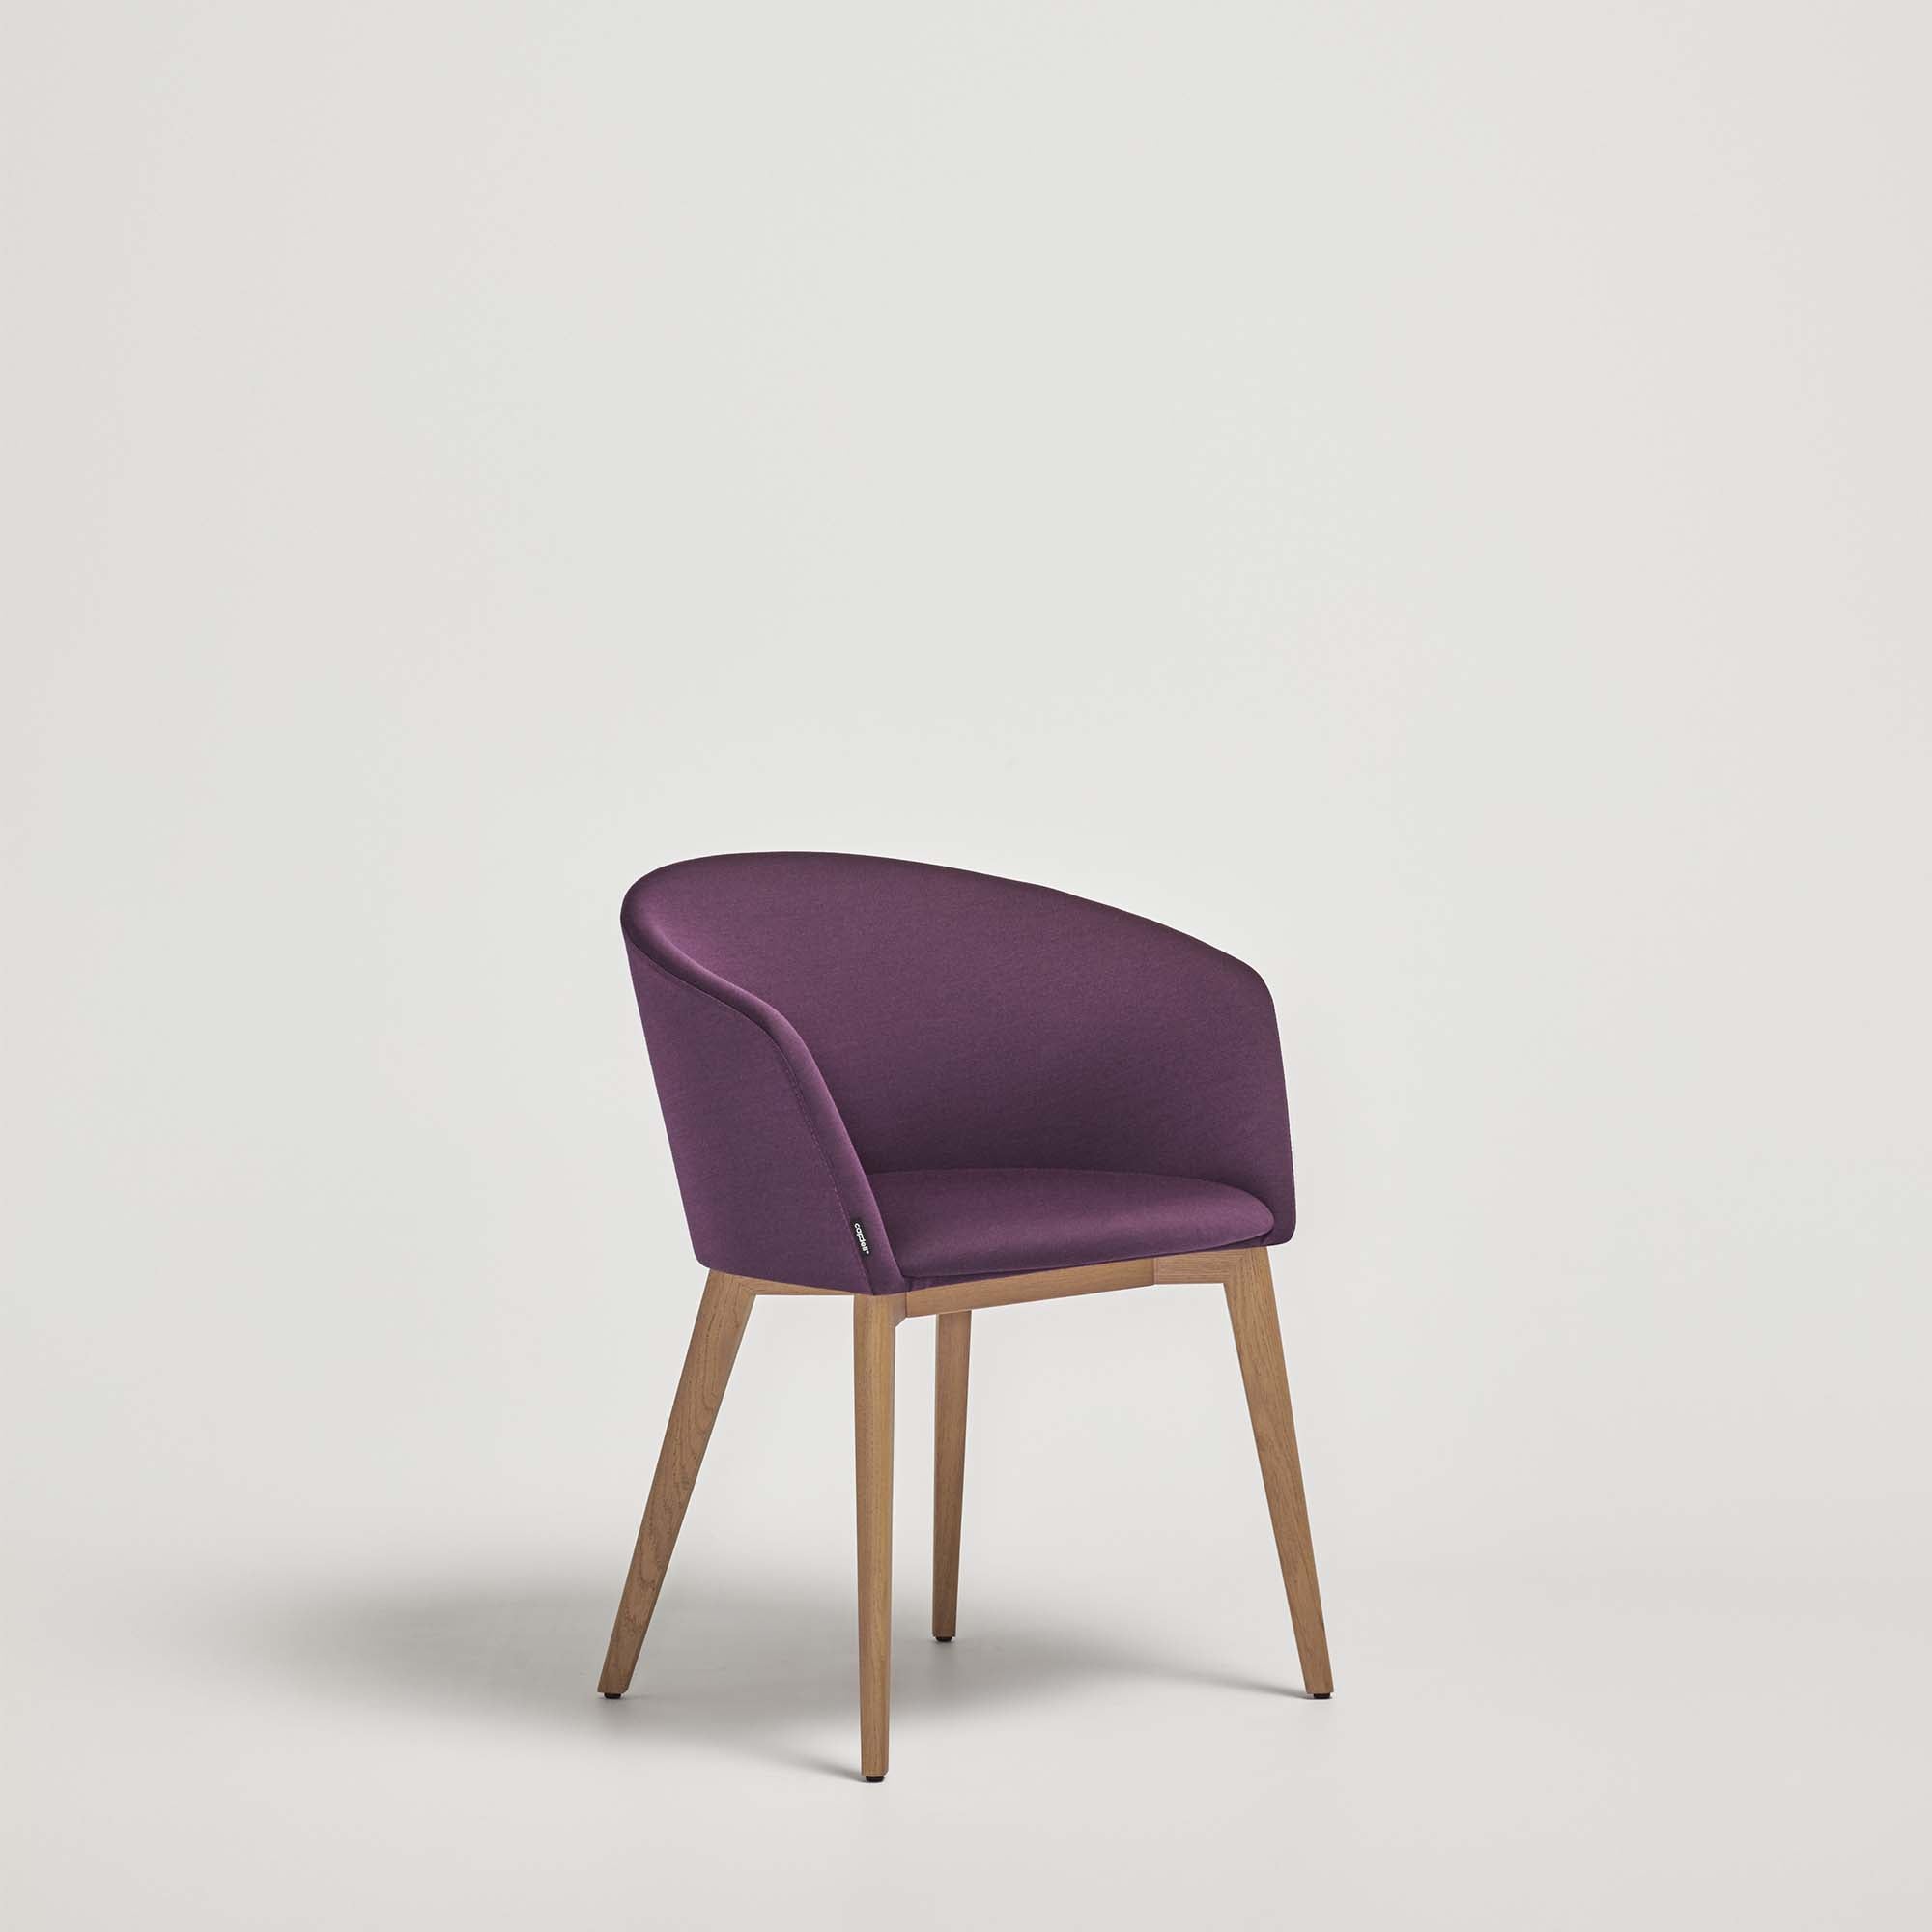 MOON Chair oak wood chair, dark natural colour, purple fabric upholstery half-side view